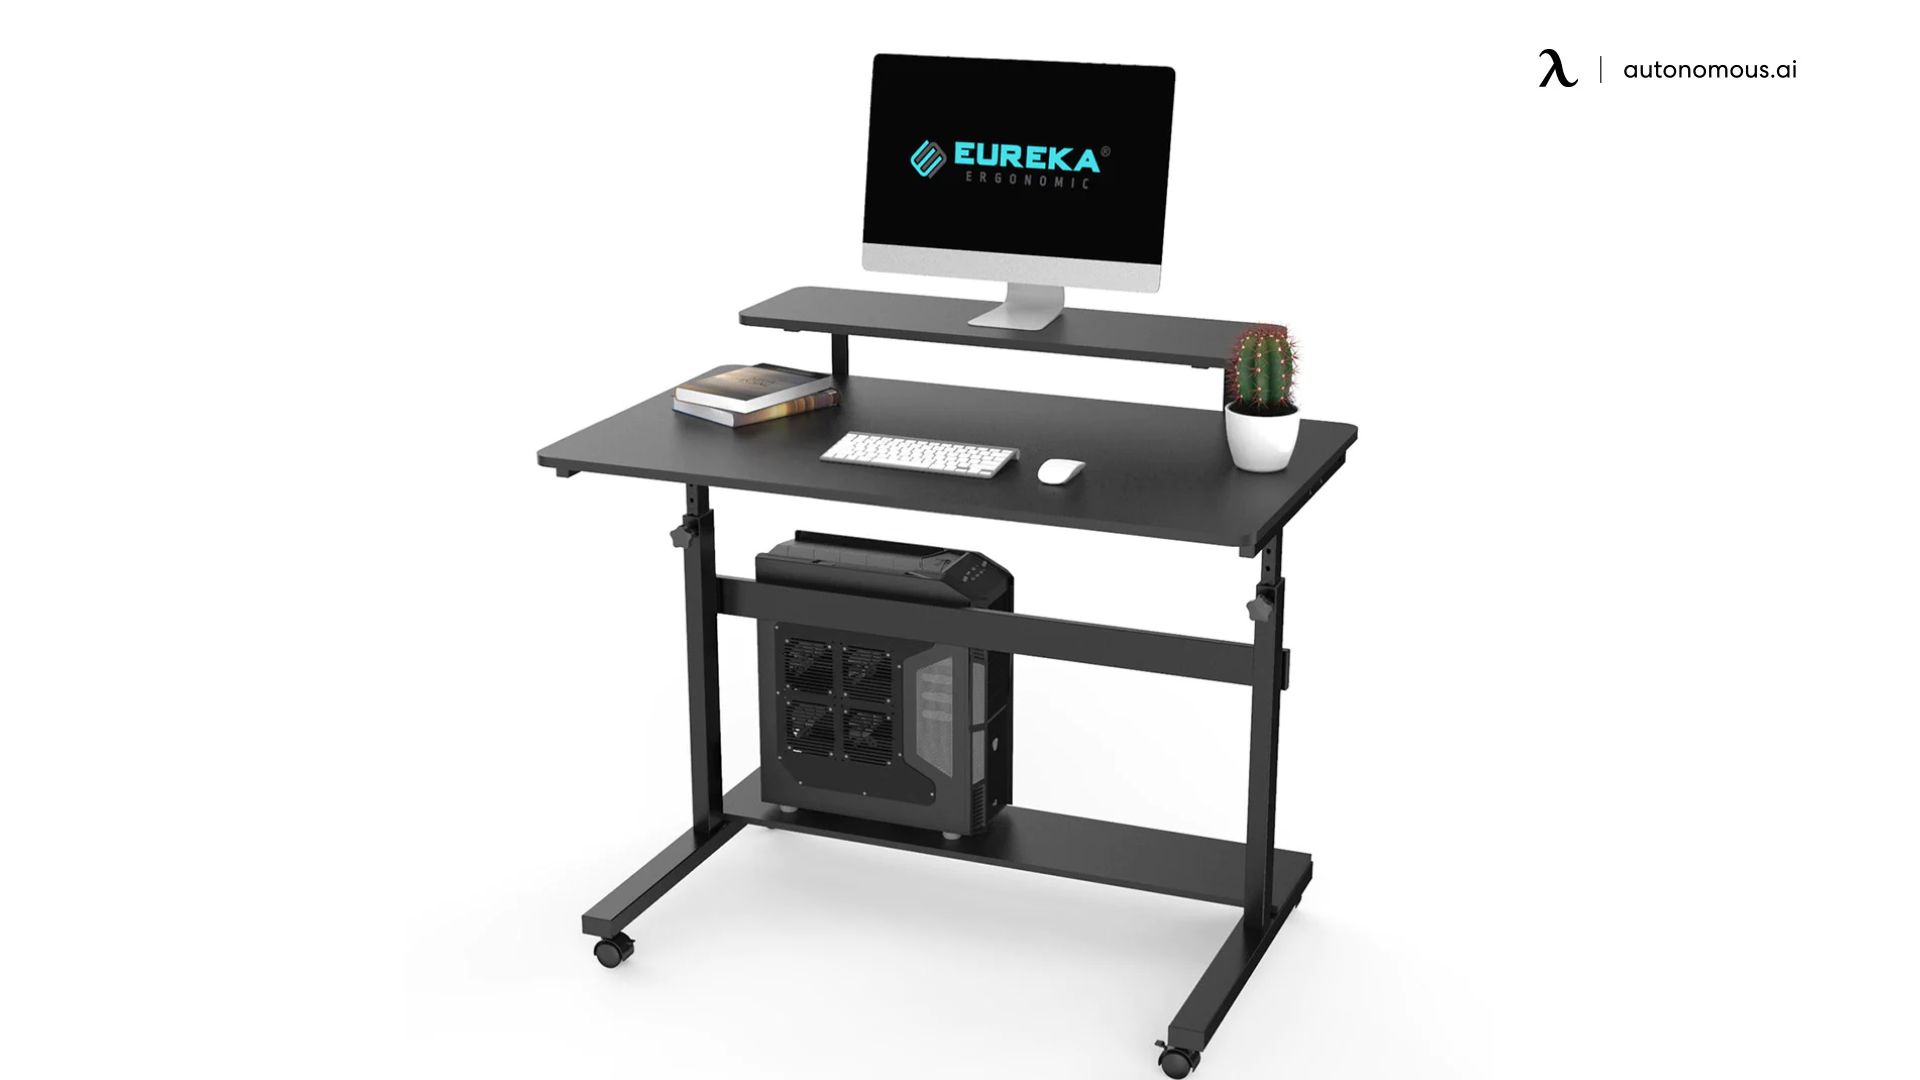 Eureka Ergonomic Manual Height Adjustable Desk